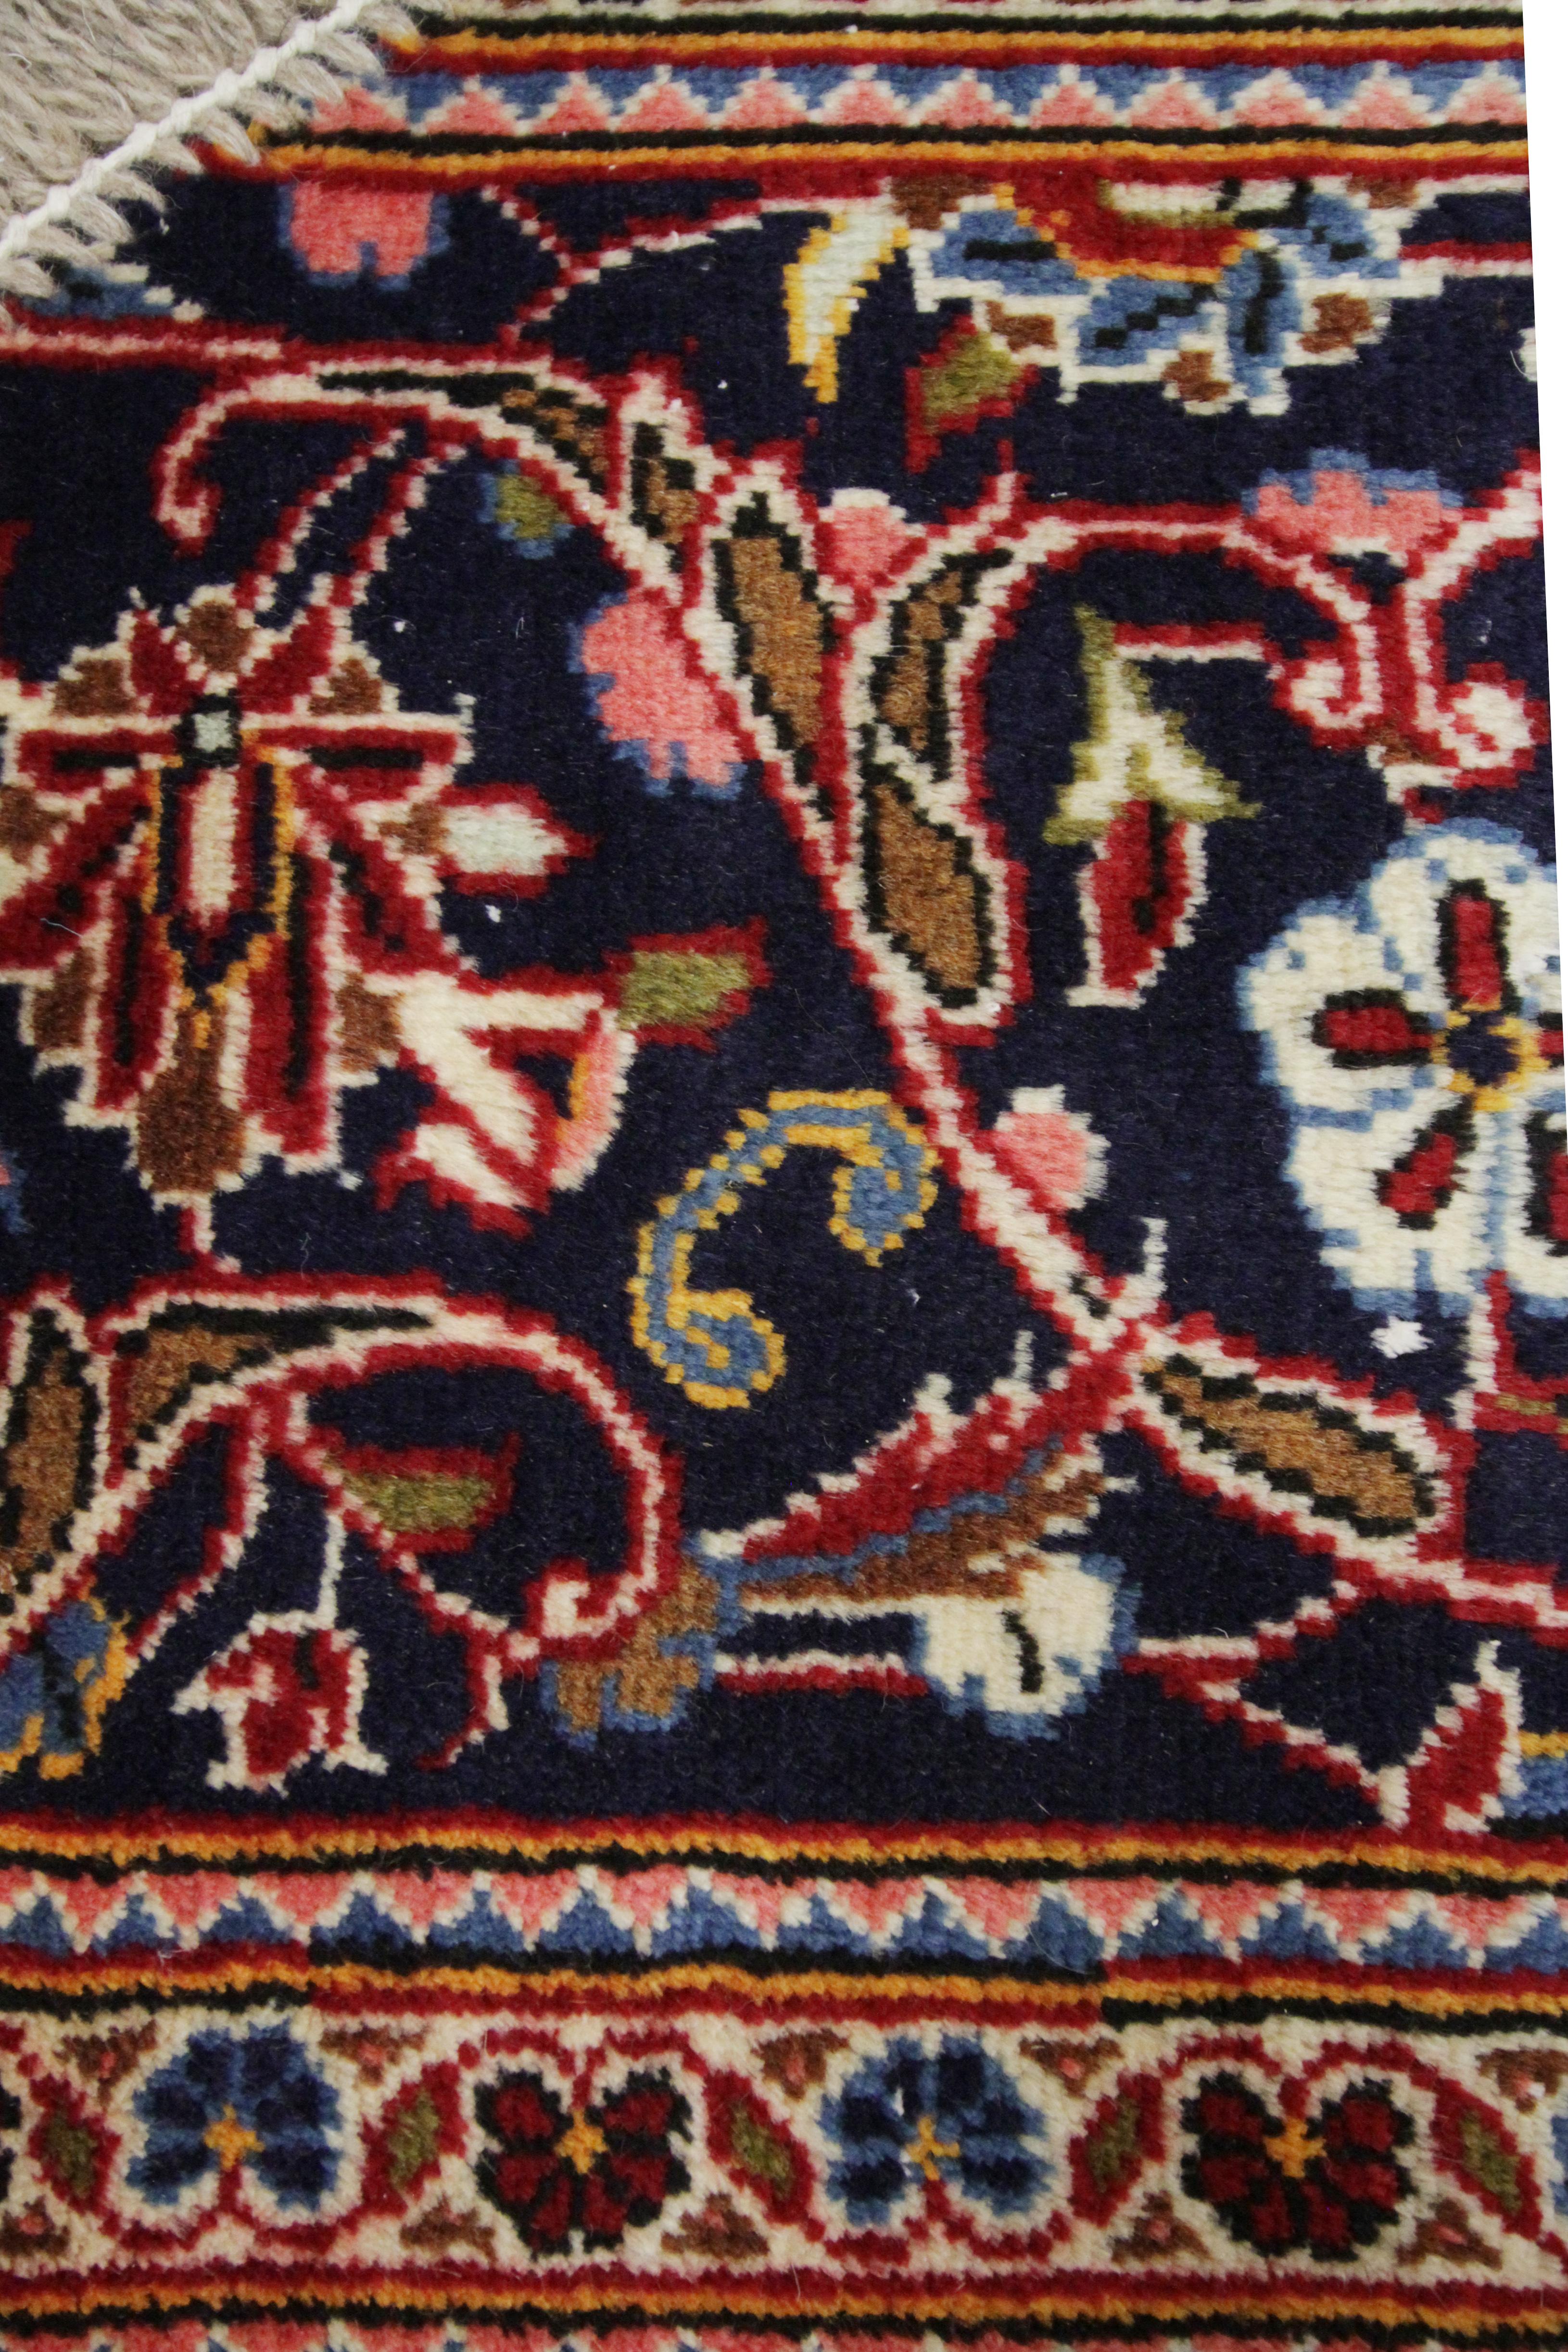 Hand-Crafted Handmade Carpet, Semicircle Entrance Way Mat Vintage Oriental Rug Door Mat